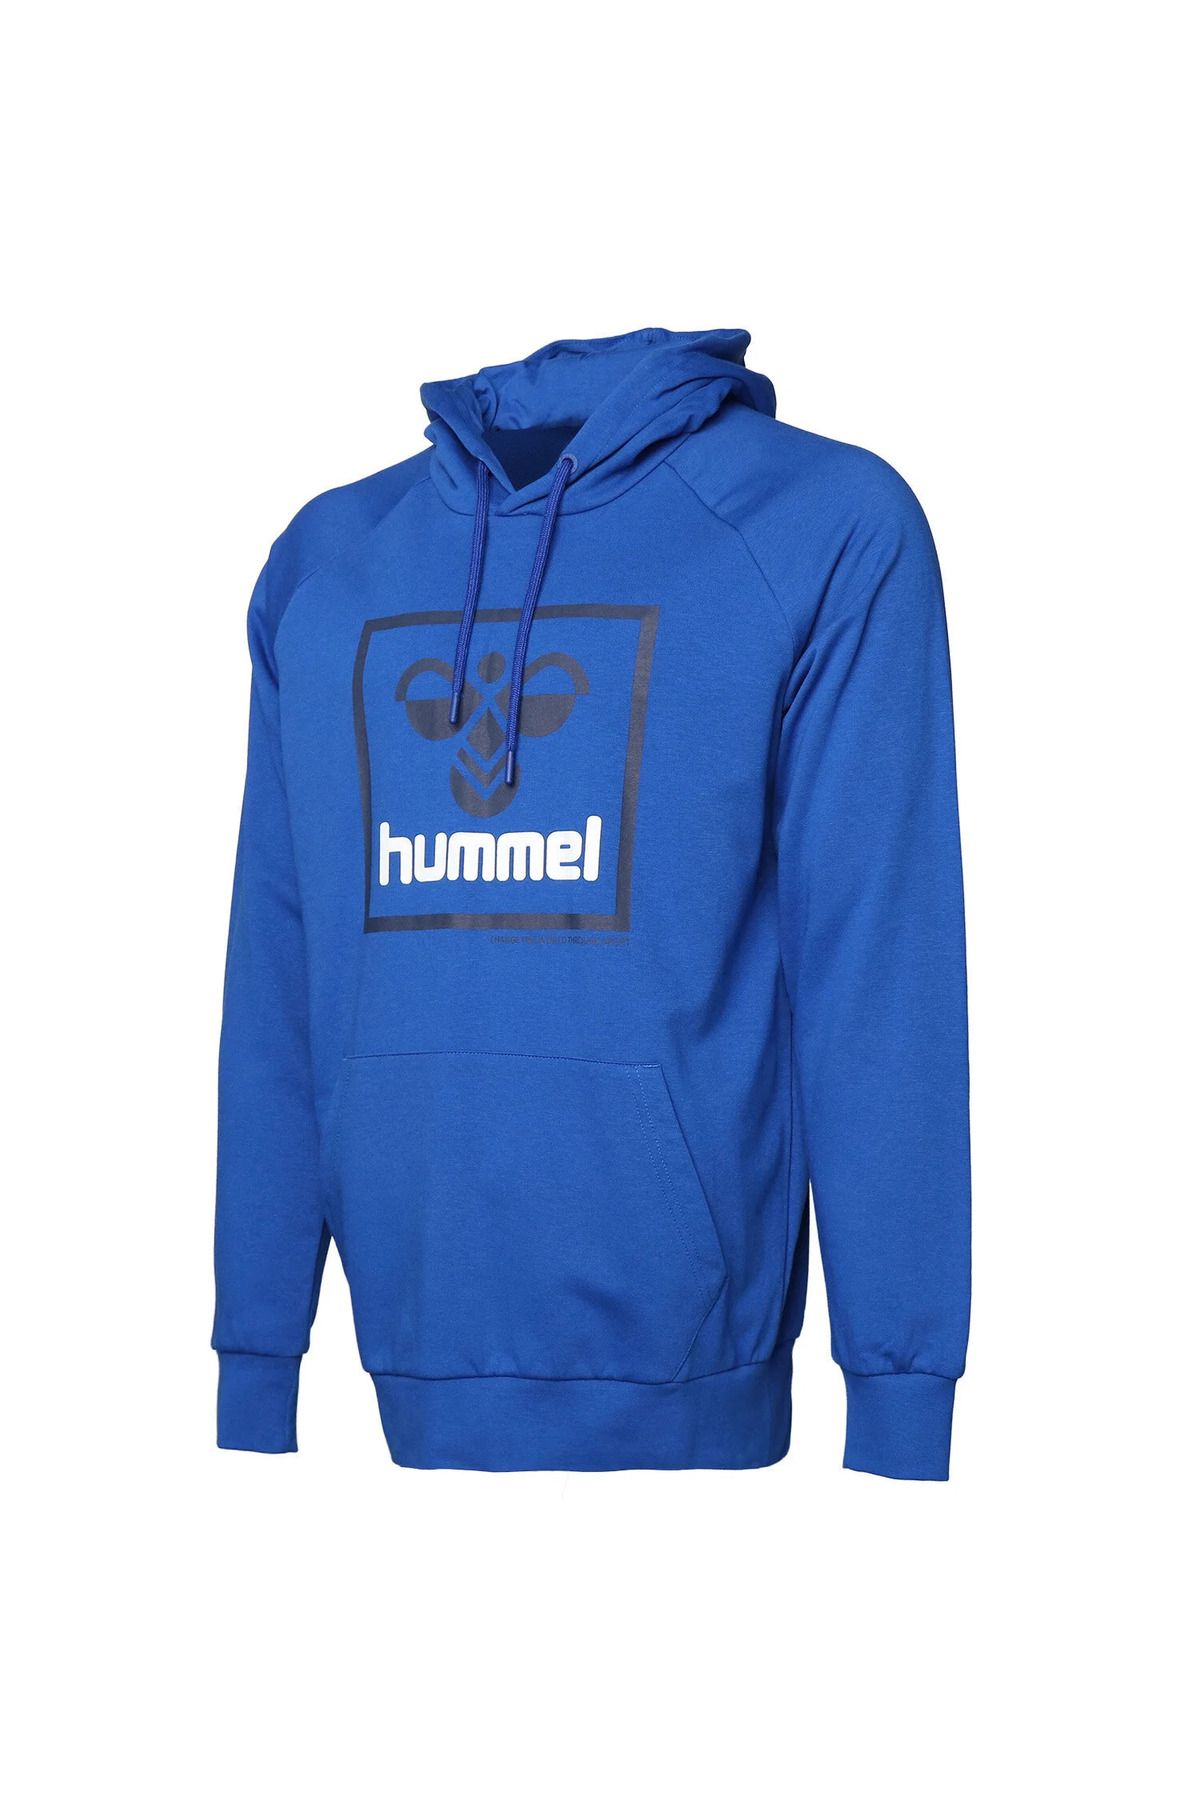 hummel Hmlt-ısam 2.0 Hoodıe